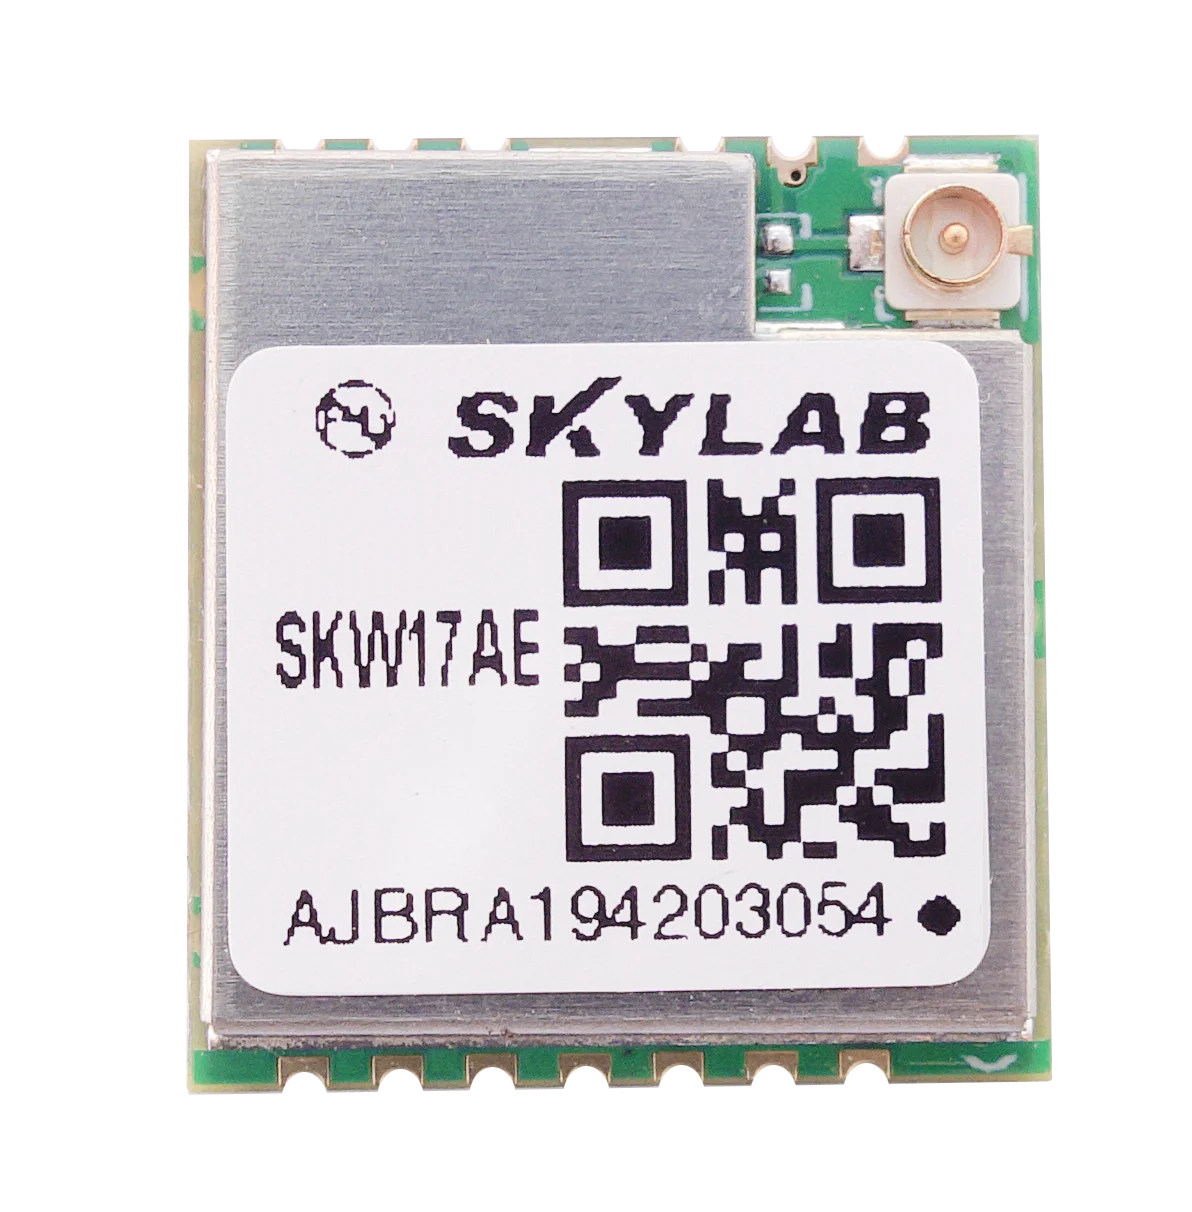 

SKYLAB USB 2.0 high speed interface MT7601 smart home set top box wireless mini wifi module